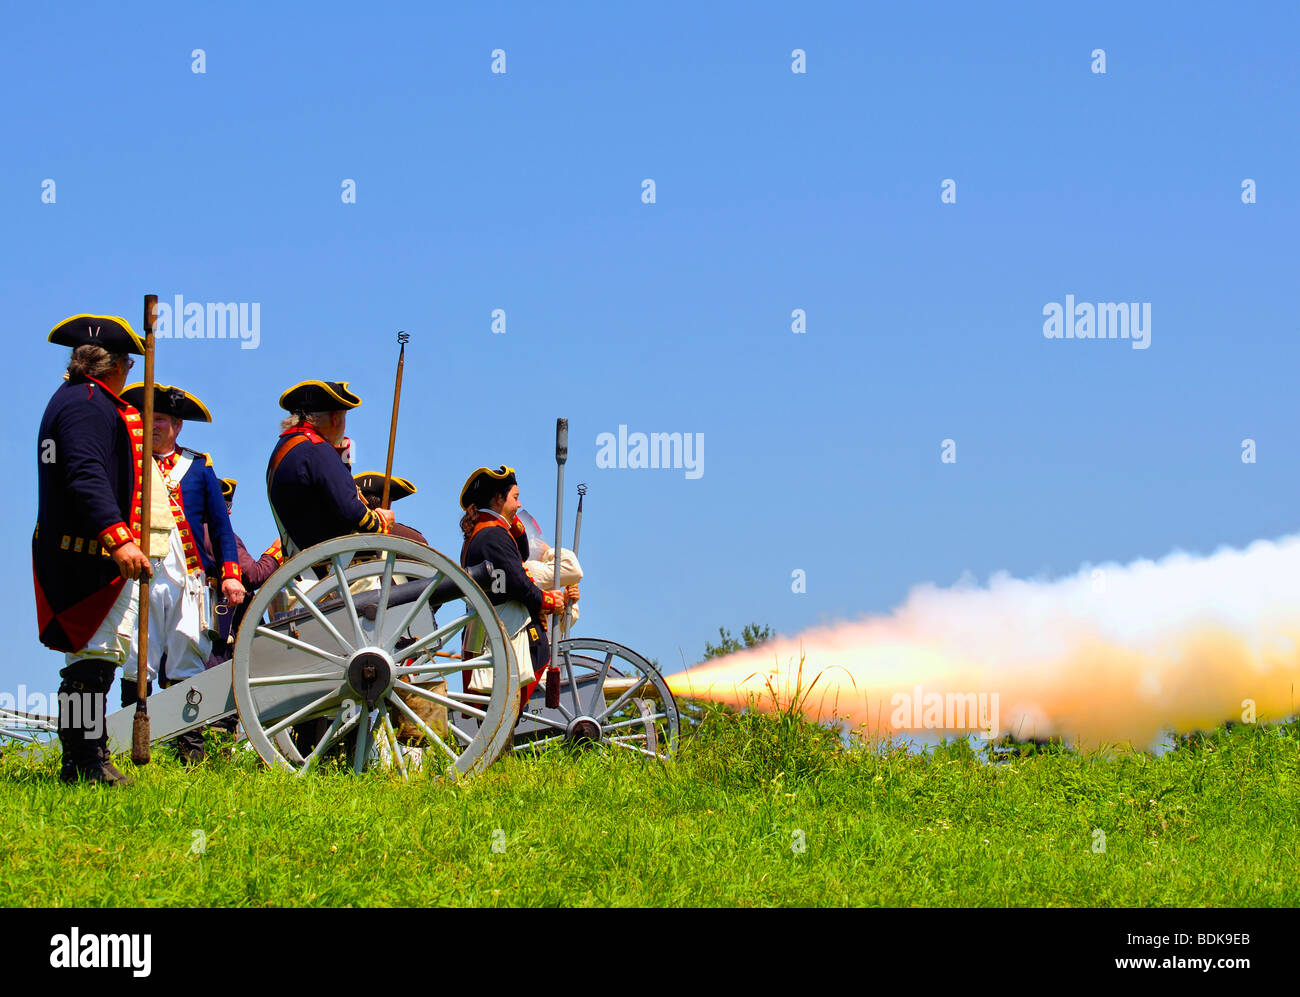 American Patriots firing cannon Stock Photo